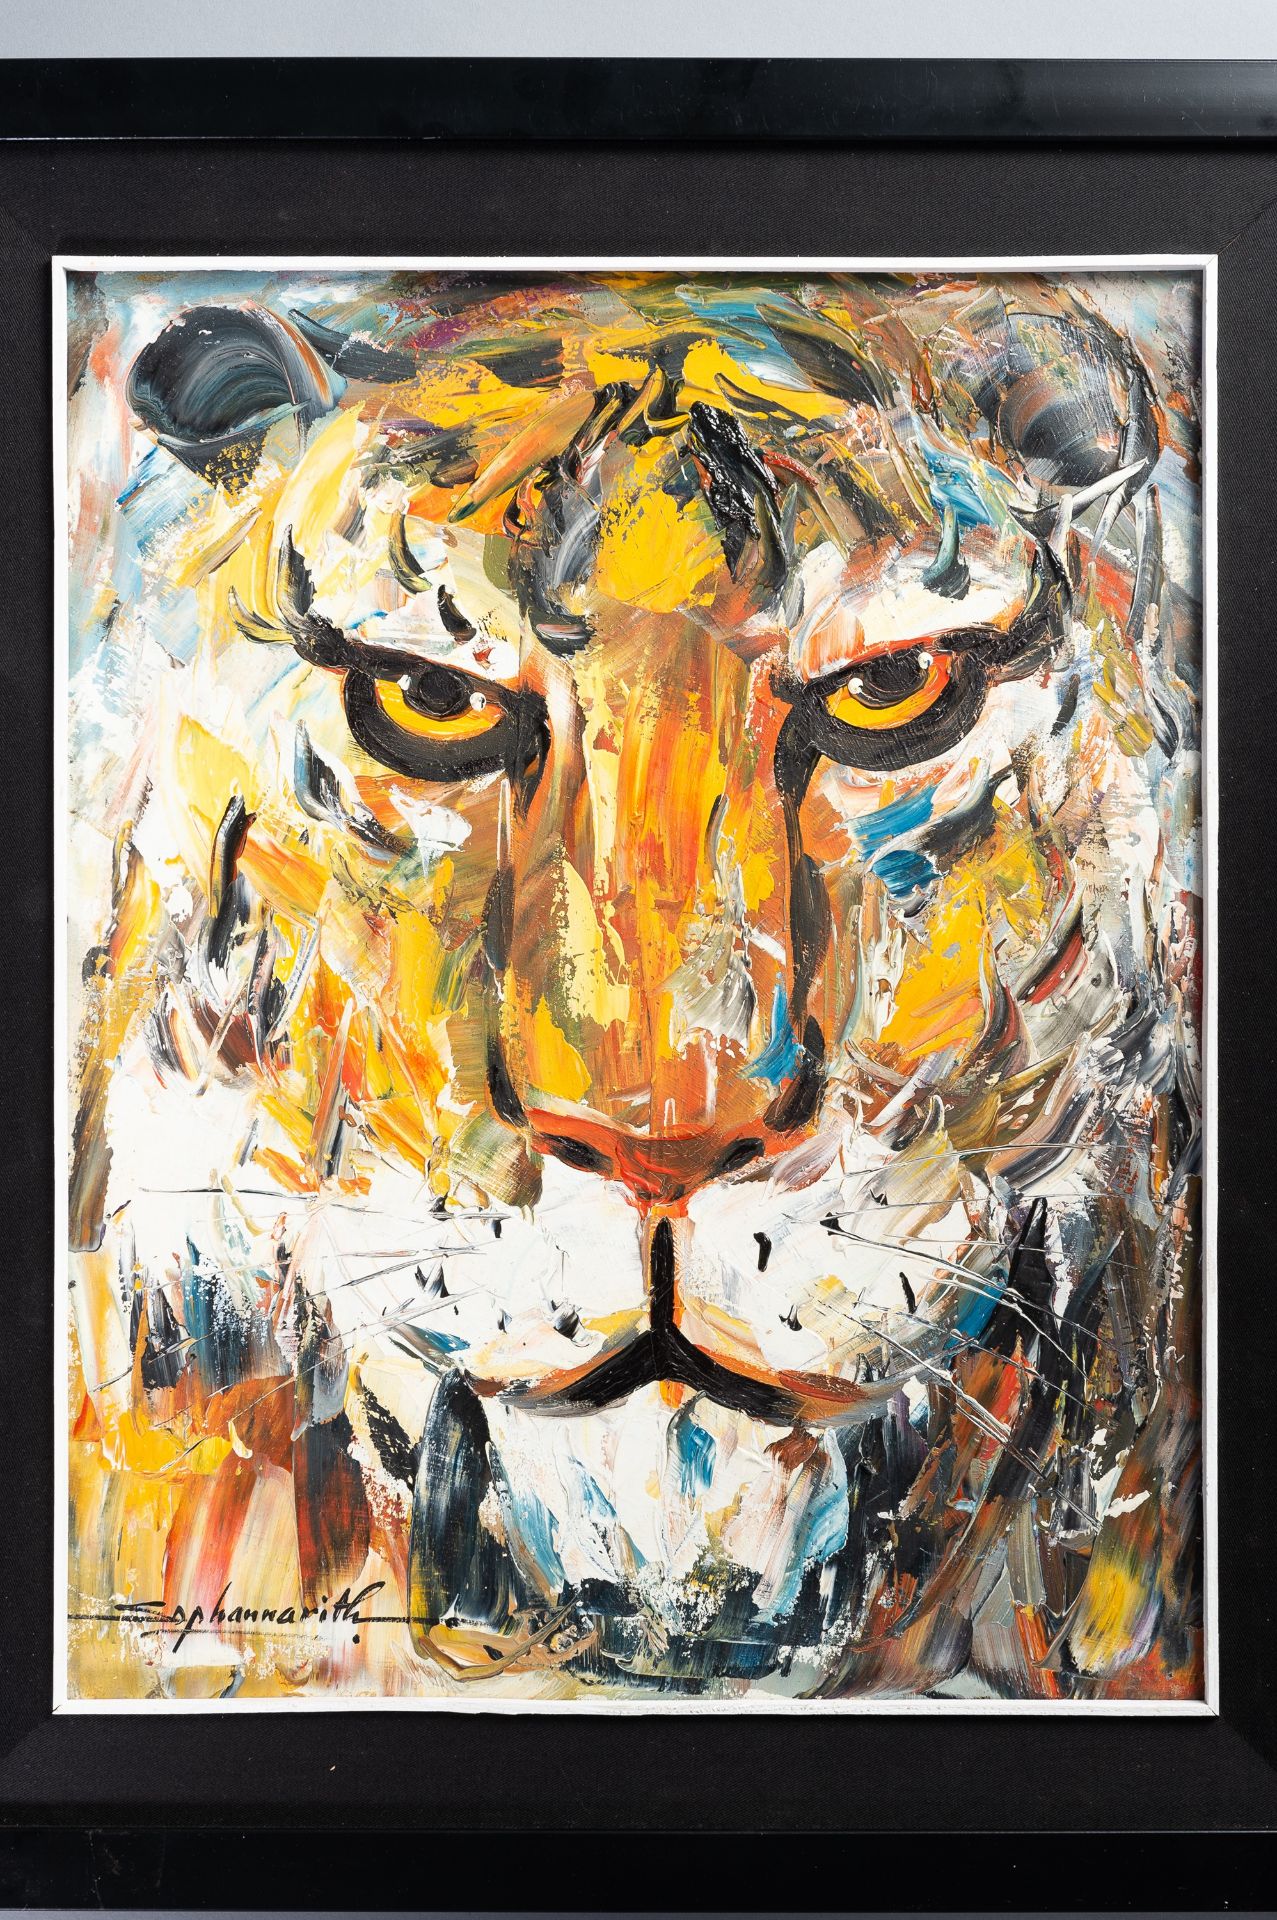 LION' BY SOPHANNARITH (BORN 1960)